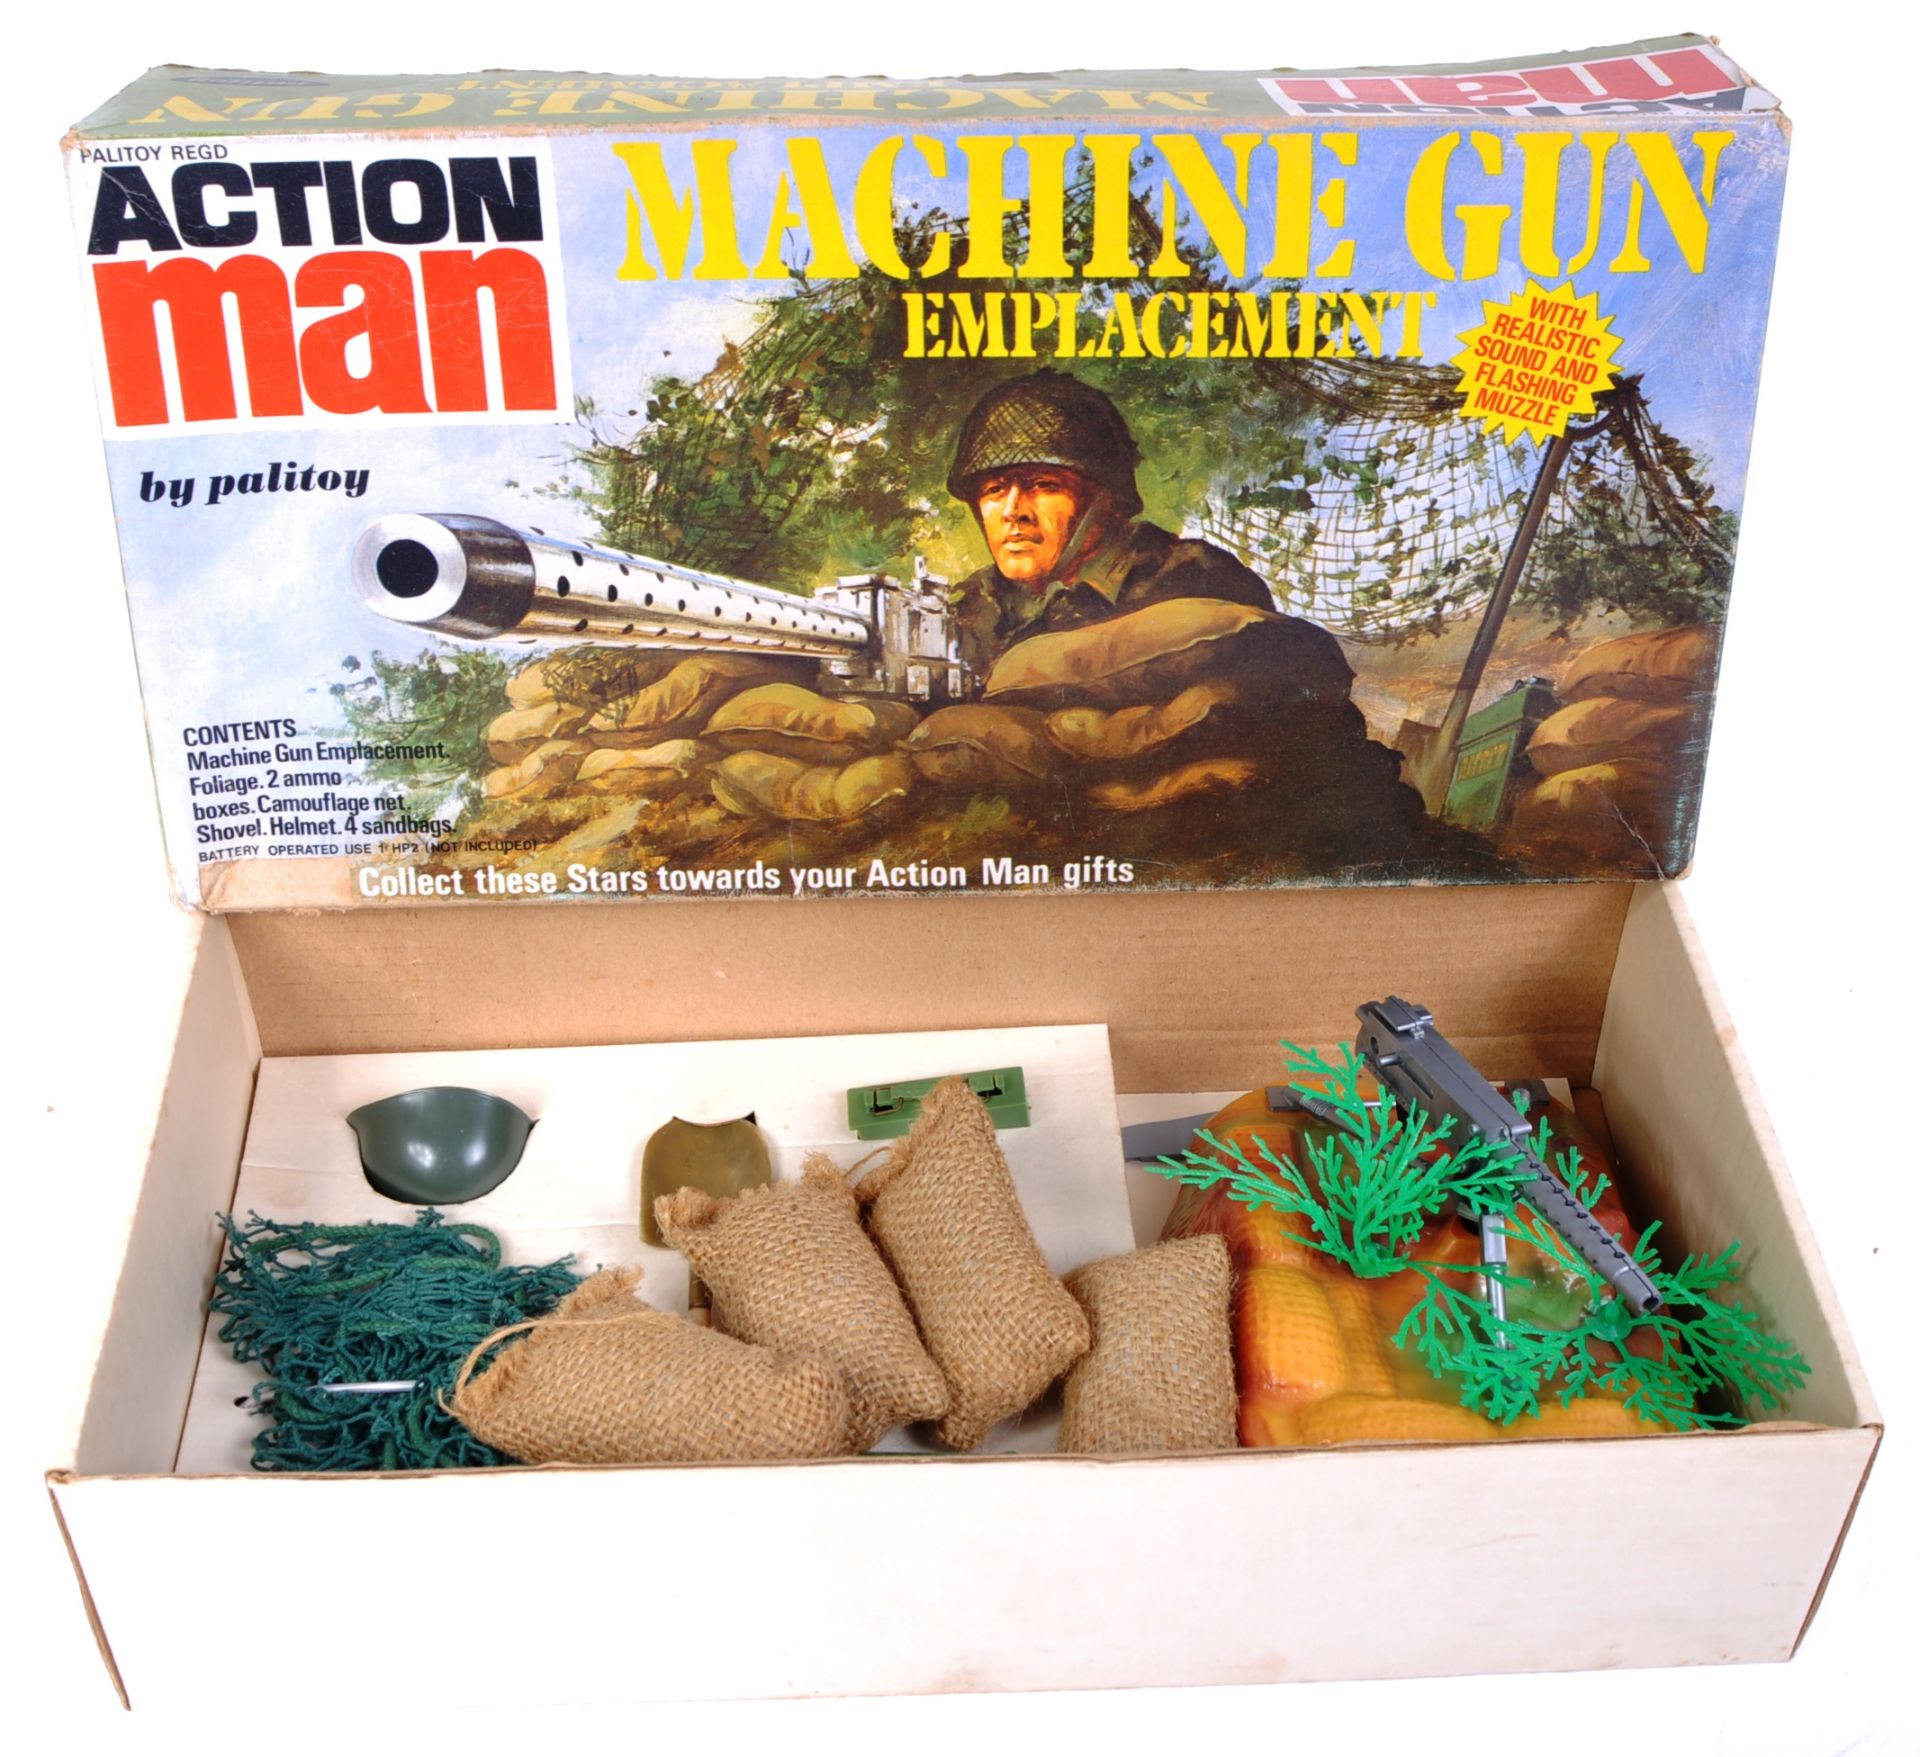 ACTION MAN - PALITOY - VINTAGE MACHINE GUN EMPLACEMENT PLAYSET